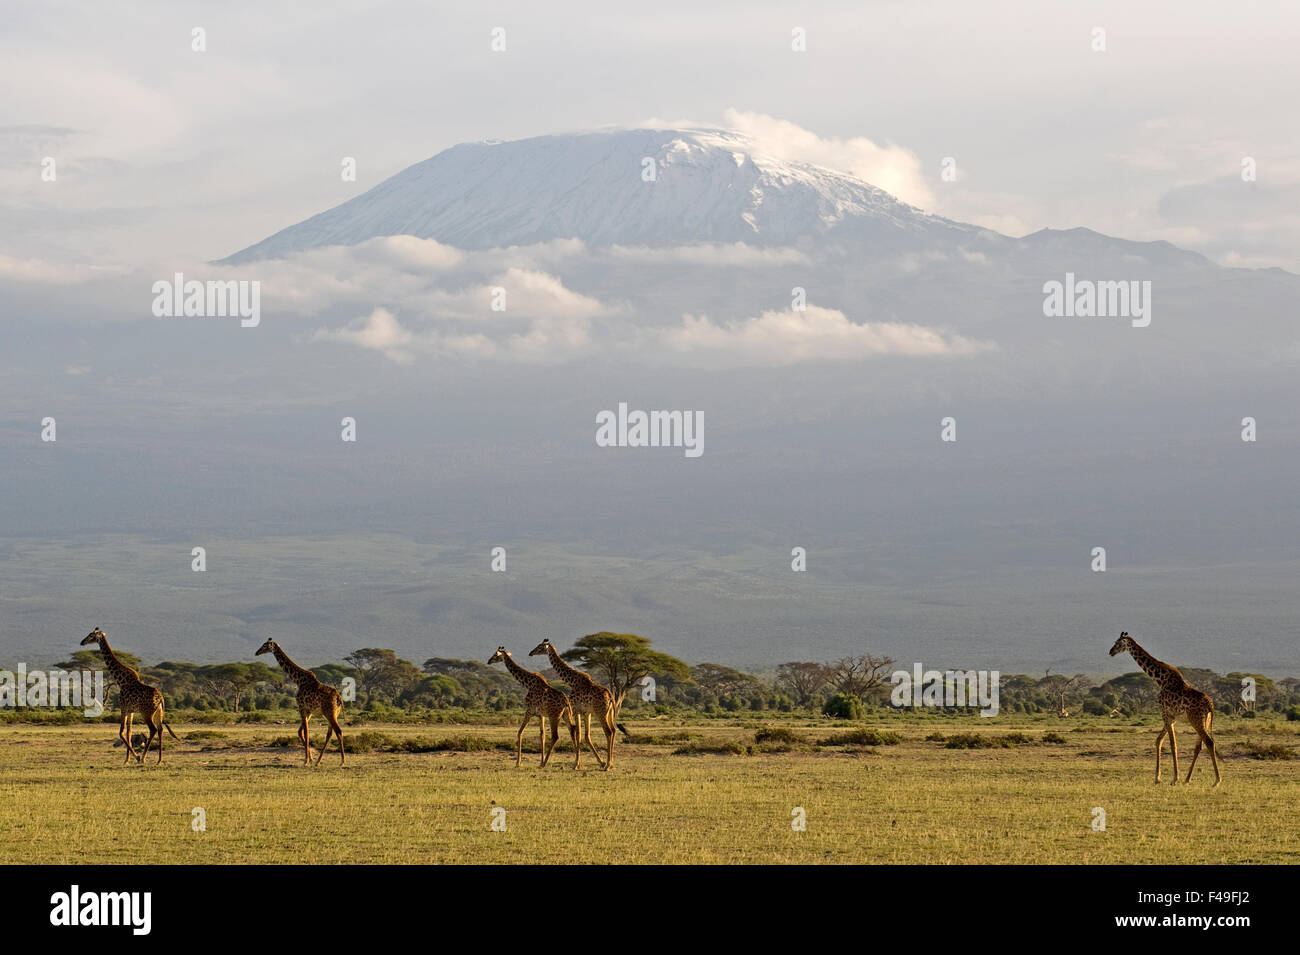 Rothschild's giraffe group with Mount Kilimanjaro in the background. Amboseli National Park, Kenya, Africa Stock Photo